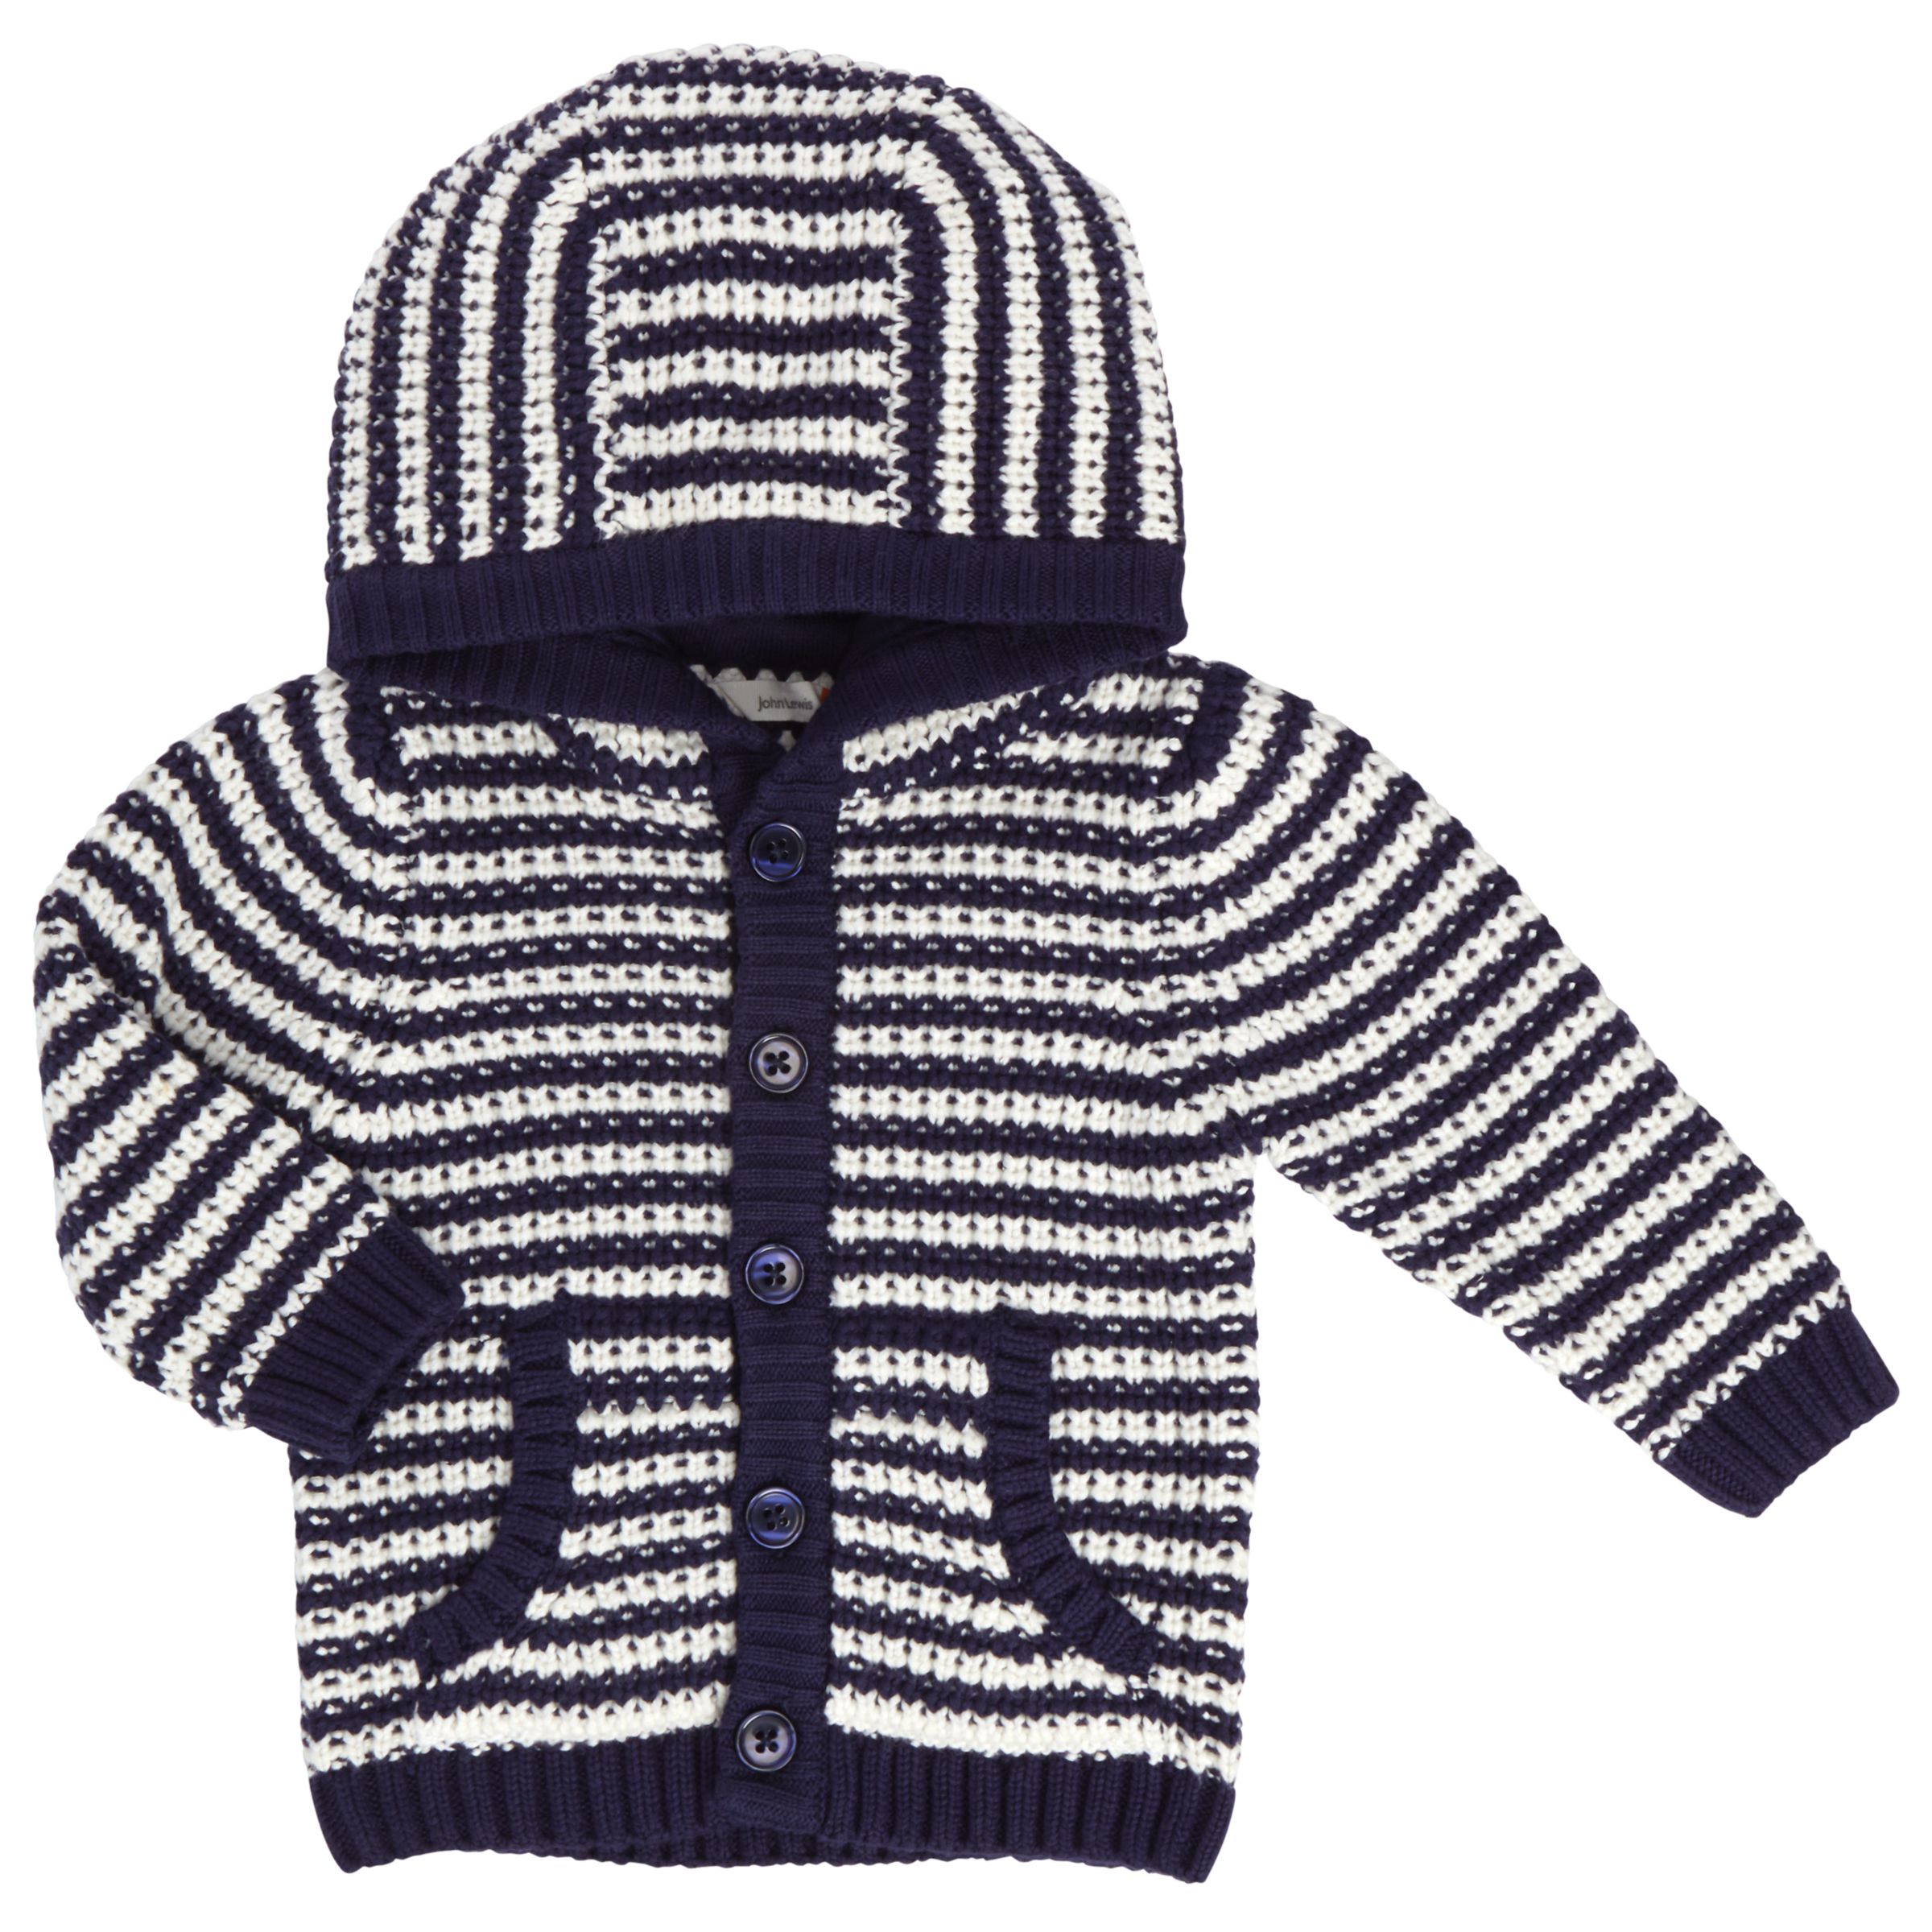 John Lewis & Partners Baby Striped Hooded Cardigan, Navy/White